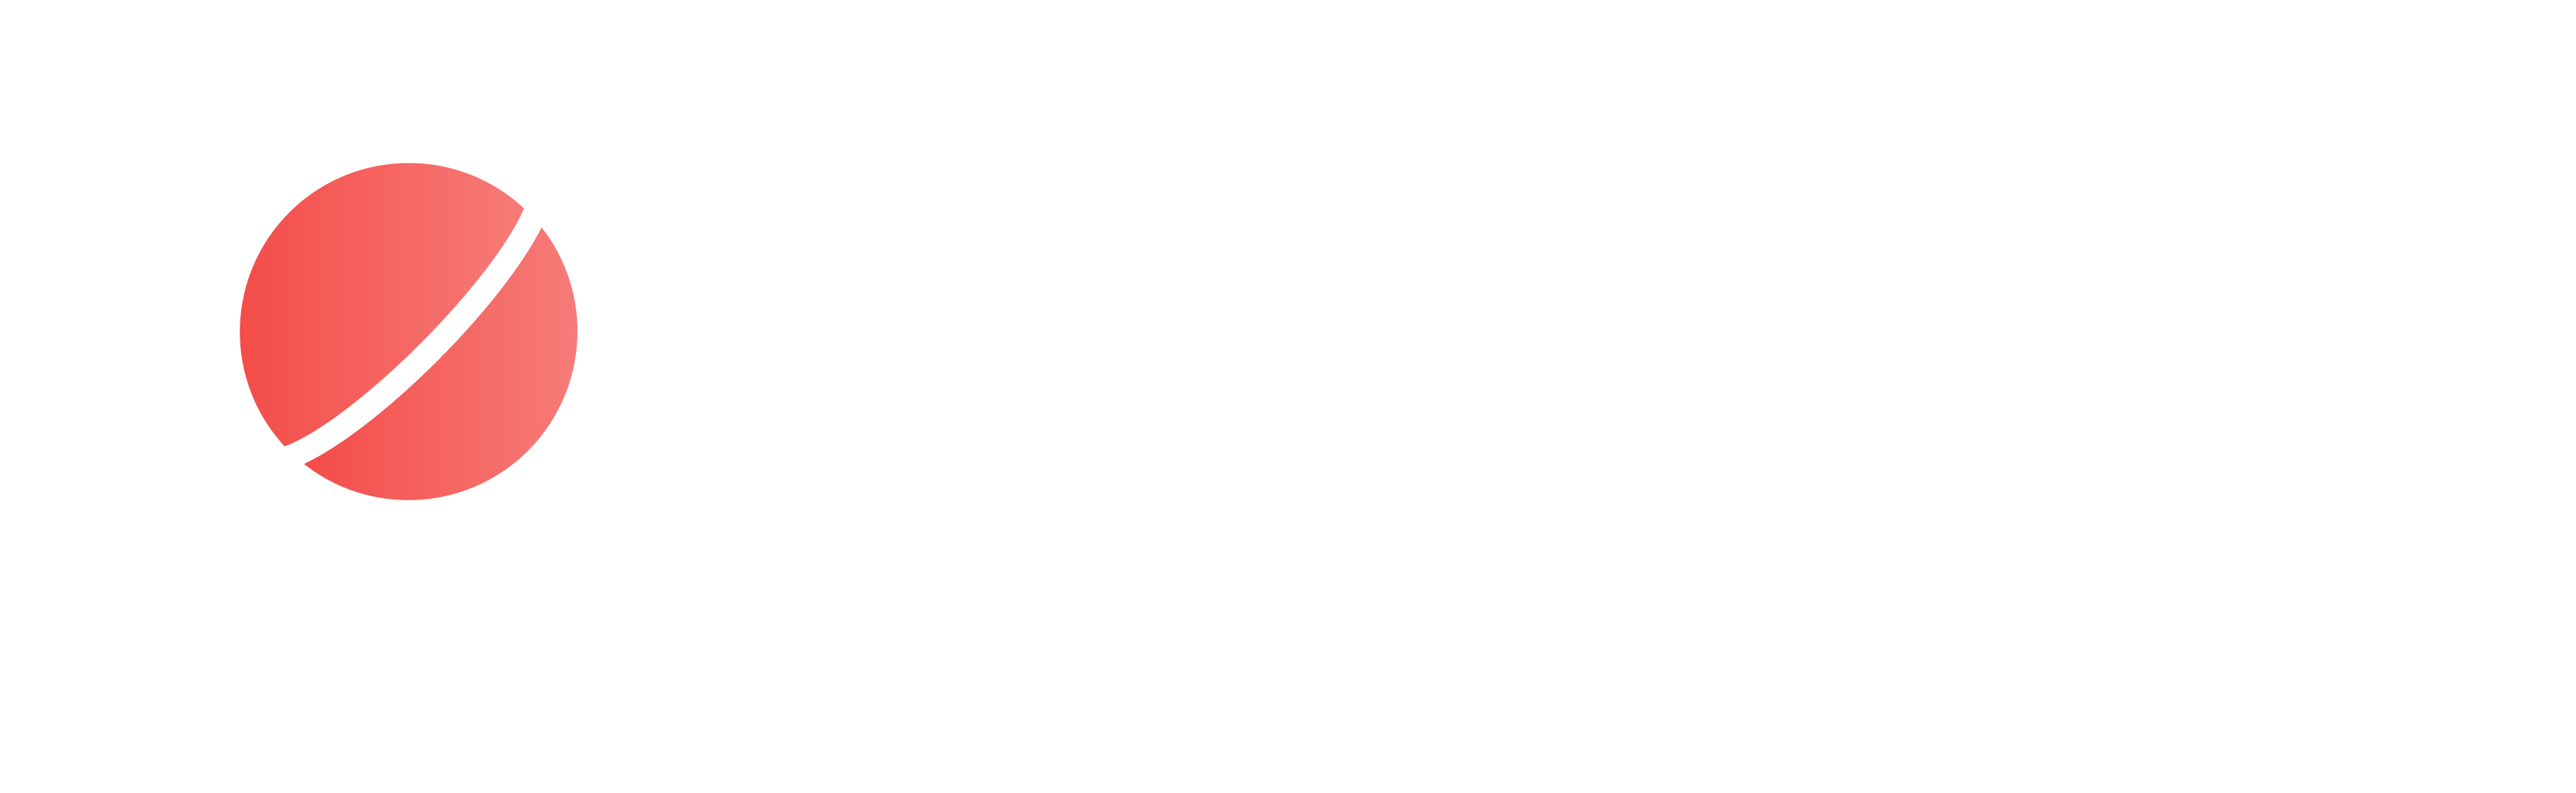 Keystone_Logos-04